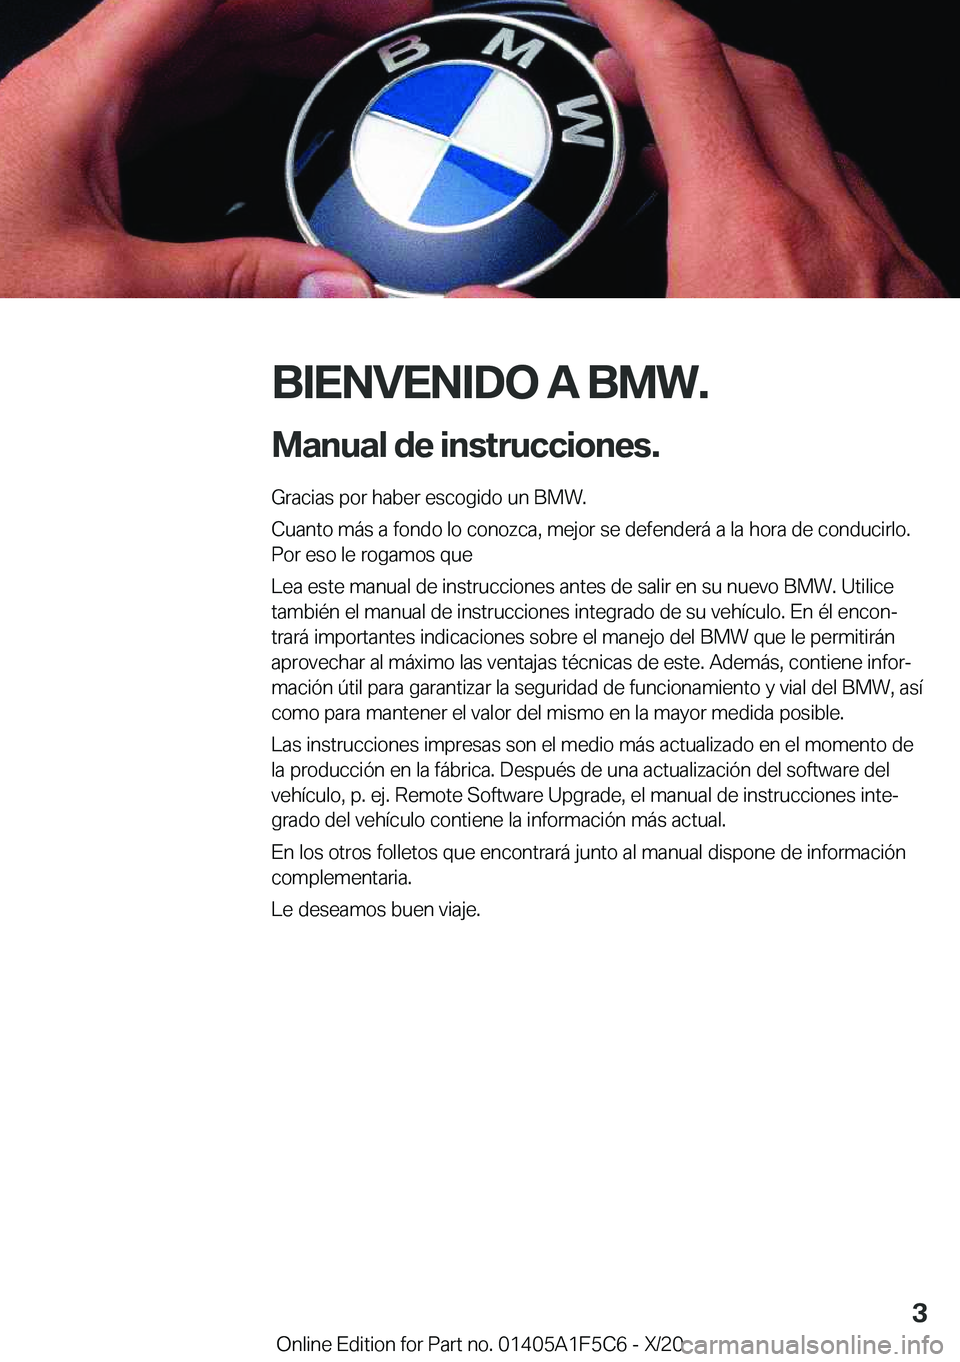 BMW X4 M 2021  Manuales de Empleo (in Spanish) �B�I�E�N�V�E�N�I�D�O��A��B�M�W�.
�M�a�n�u�a�l��d�e��i�n�s�t�r�u�c�c�i�o�n�e�s�. �G�r�a�c�i�a�s��p�o�r��h�a�b�e�r��e�s�c�o�g�i�d�o��u�n��B�M�W�.
�C�u�a�n�t�o��m�